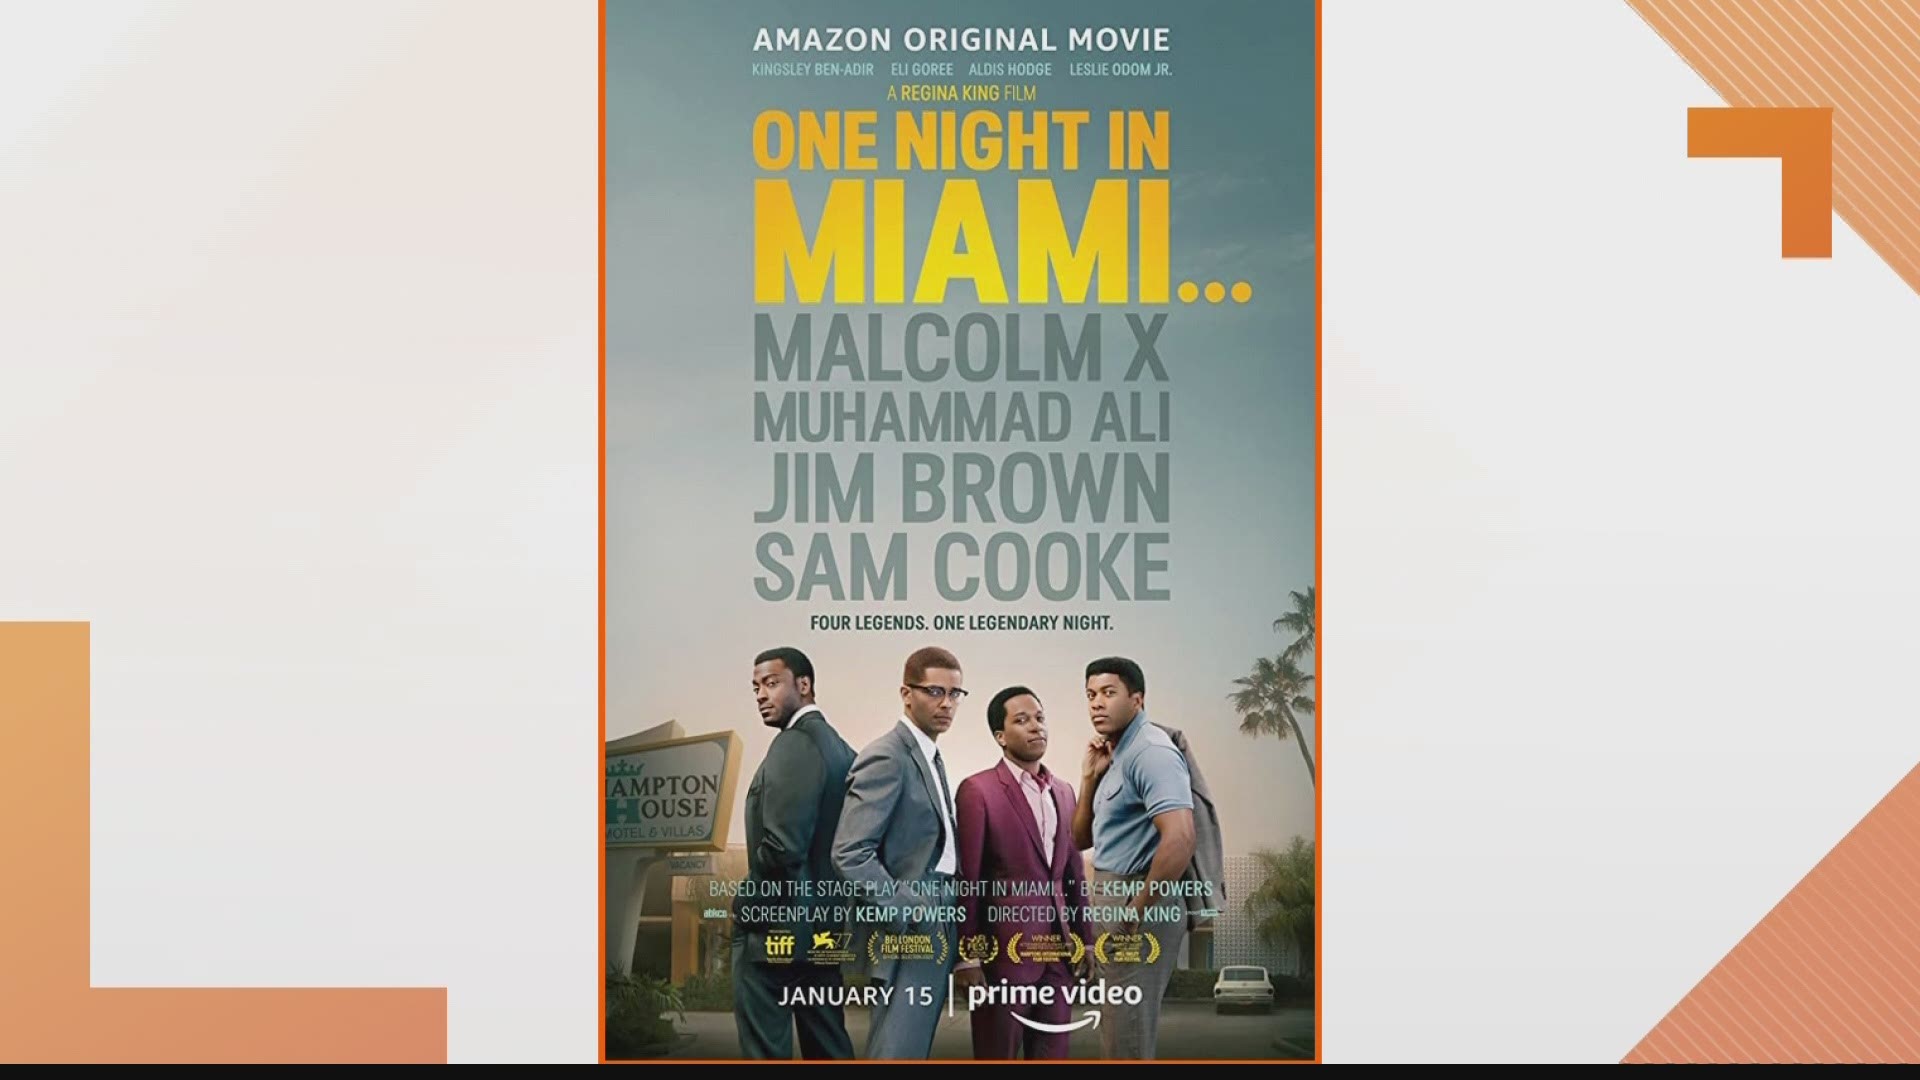 KSDK Film Critic Dan Buffa and Associate Producer Lexi Brown review "One Night in Miami"